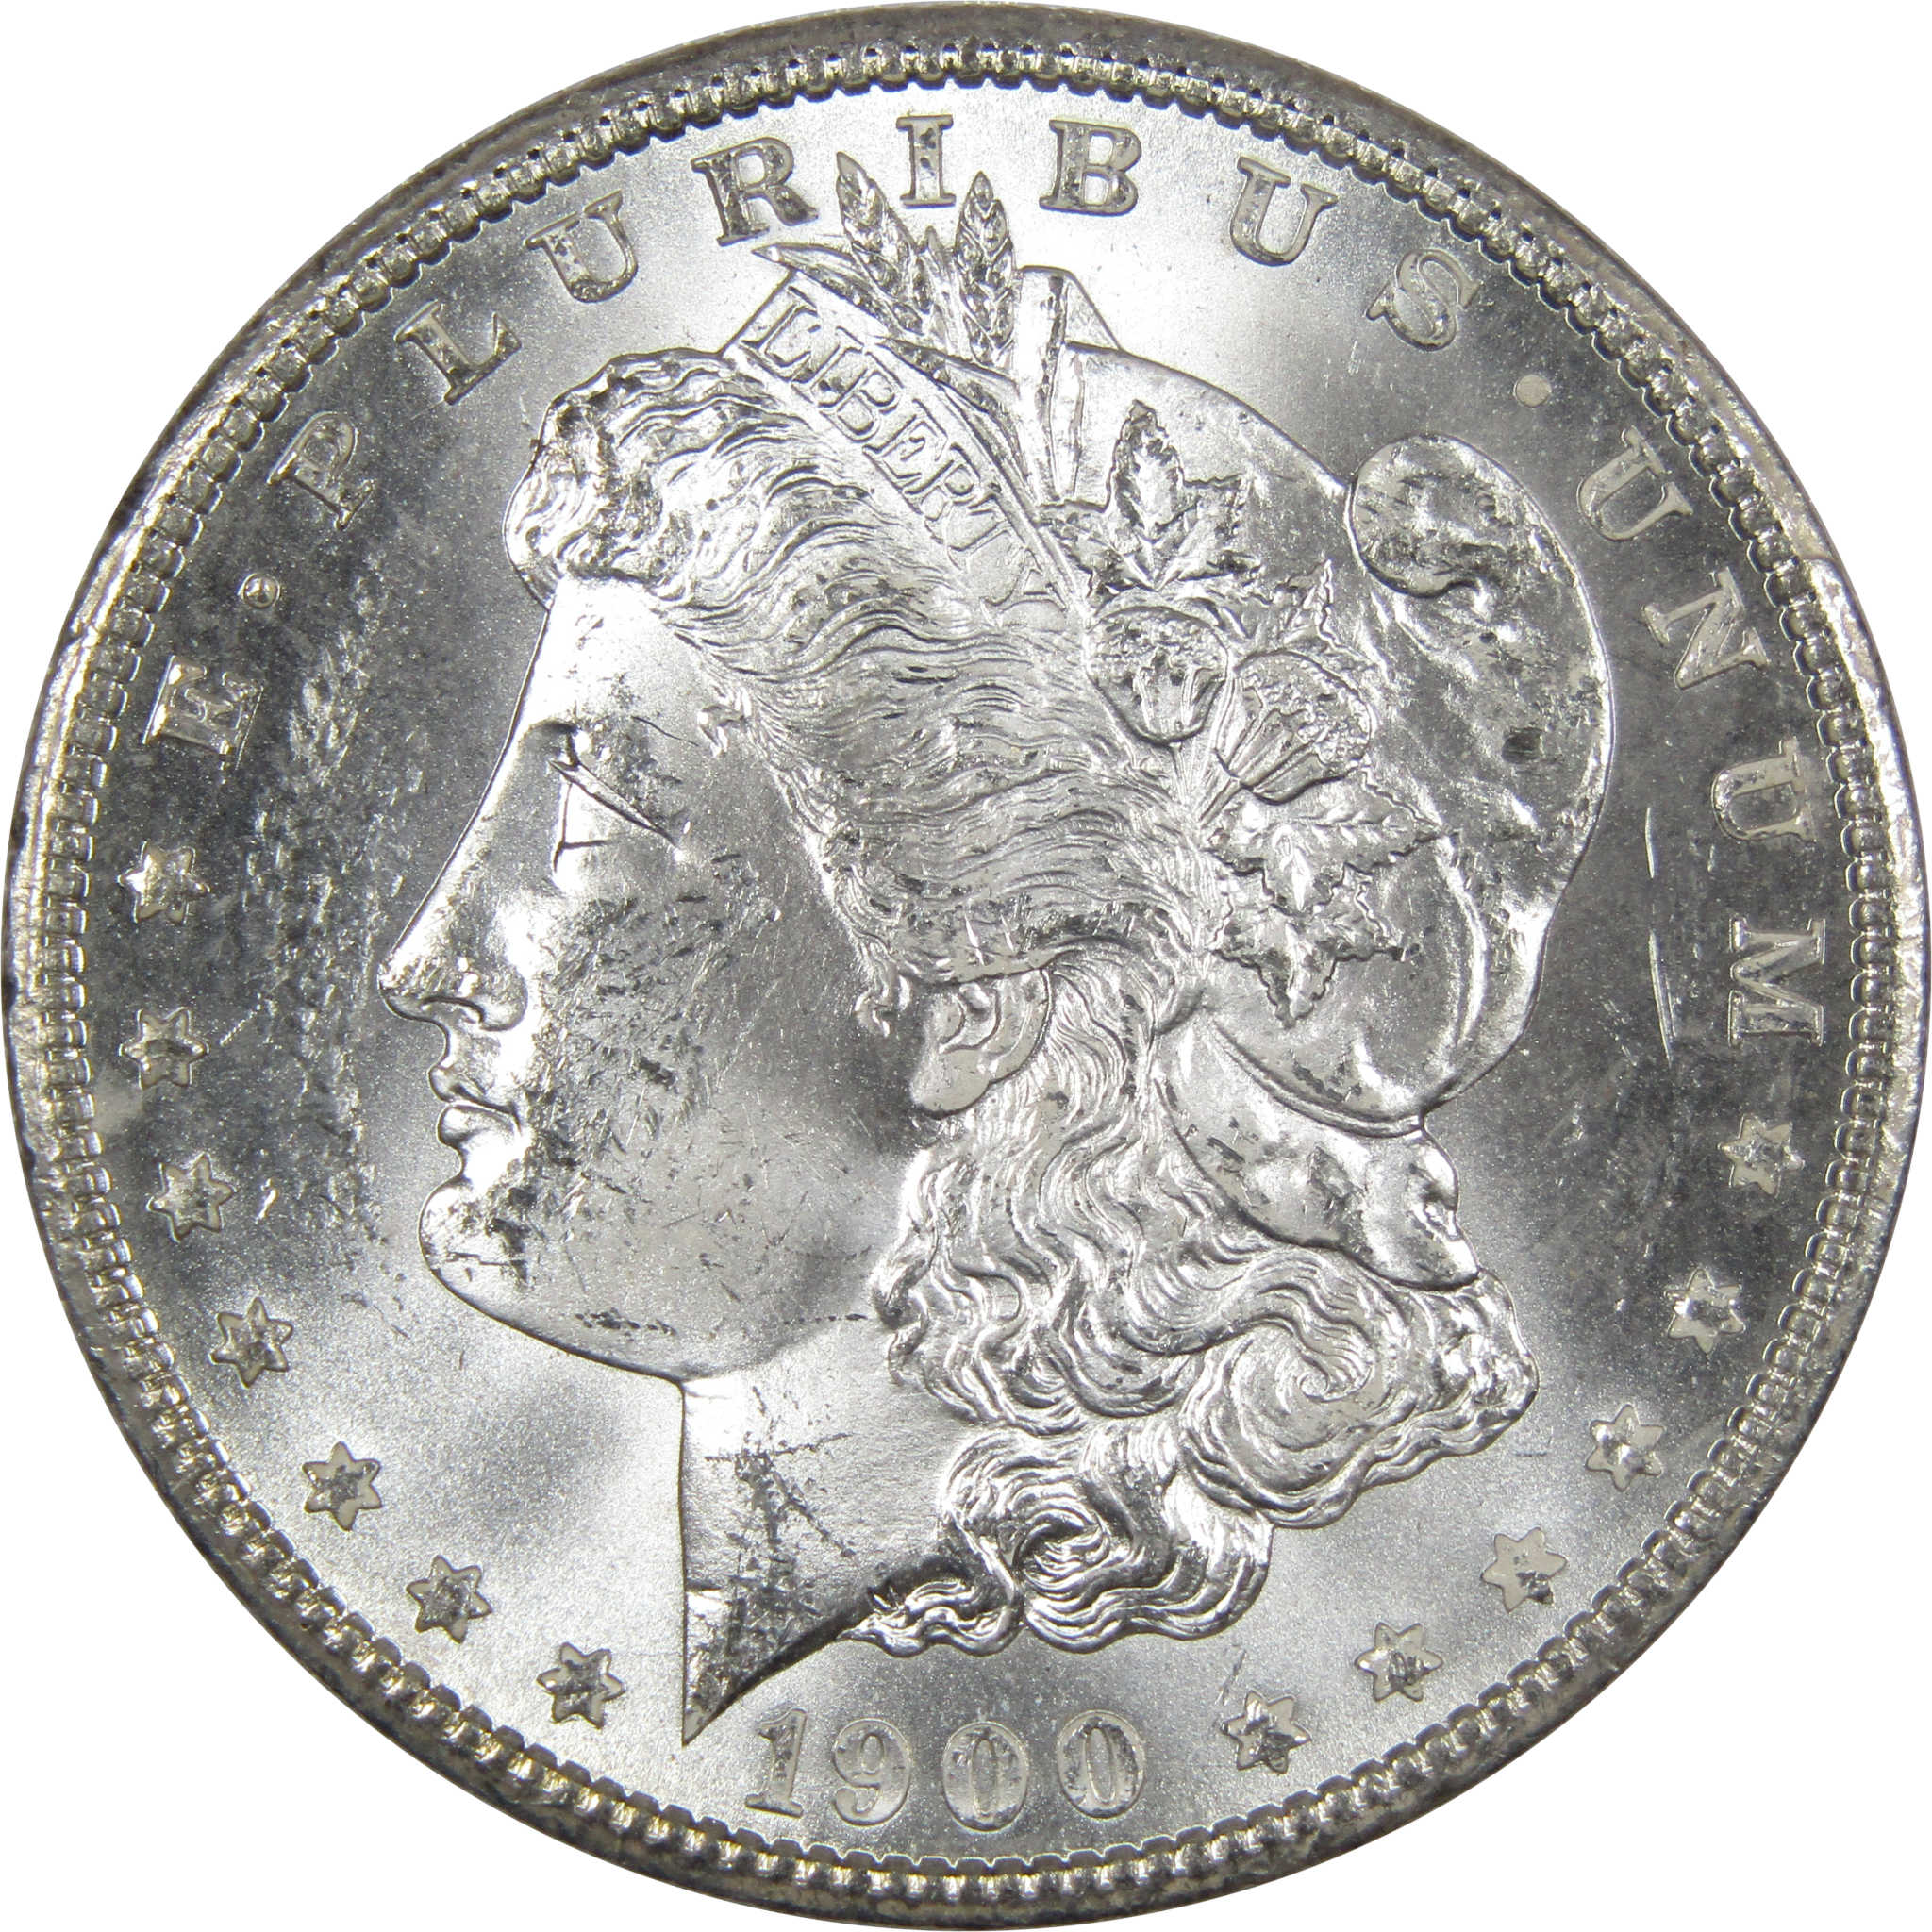 1900 O Morgan Dollar BU Uncirculated Mint State 90% Silver SKU:IPC9781 - Morgan coin - Morgan silver dollar - Morgan silver dollar for sale - Profile Coins &amp; Collectibles